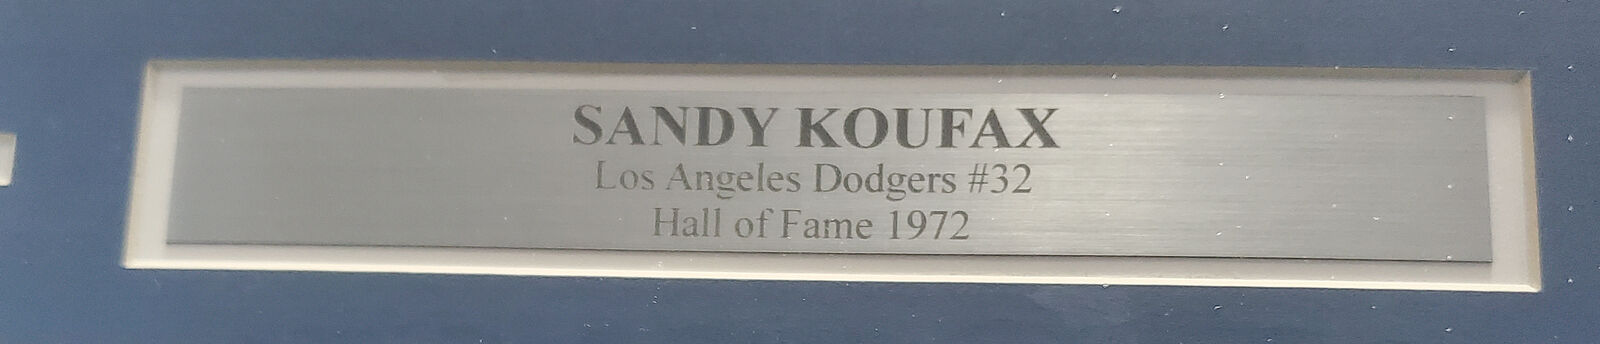 Sandy Koufax Los Angeles Dodgers Signed Framed 16x20 Photo #A34697 BAS COA (Brooklyn)